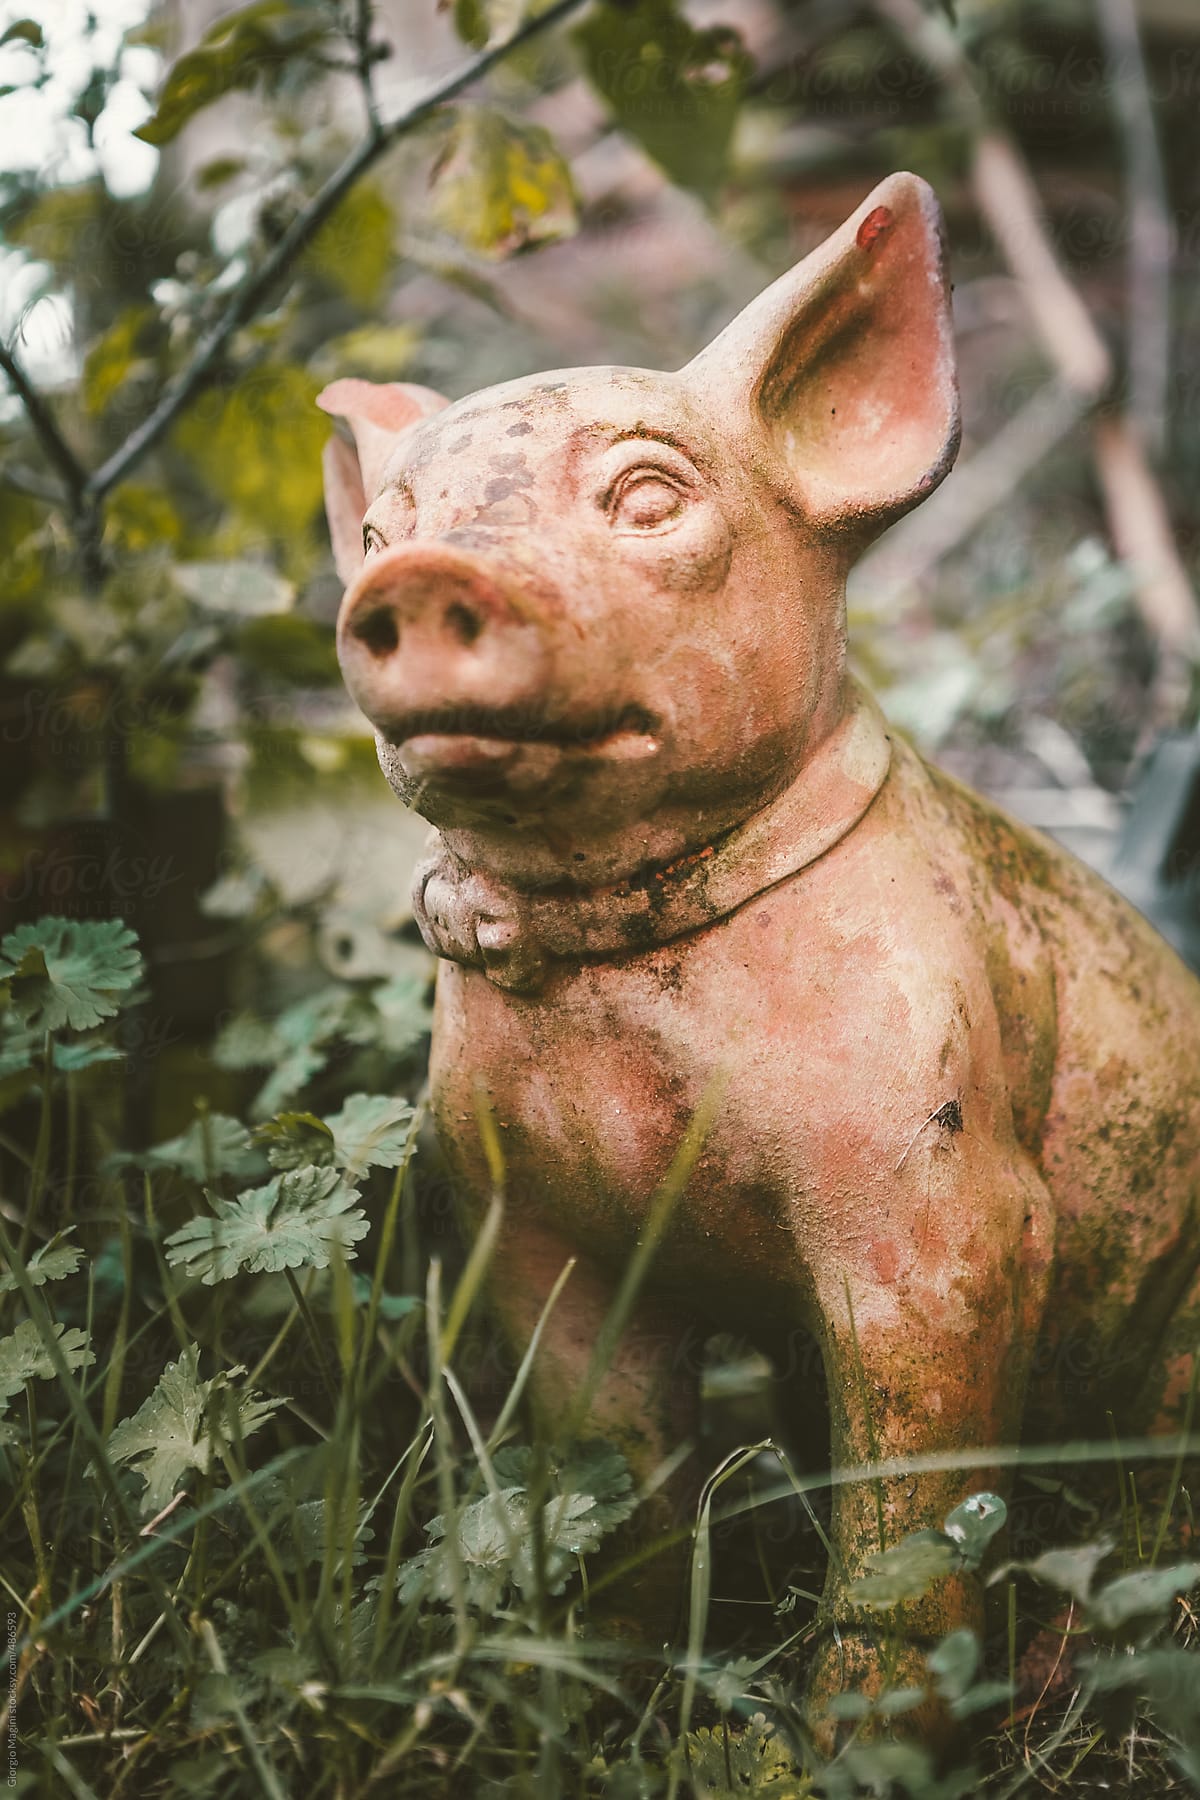 Ceramic Statue of a Piglet in the Garden